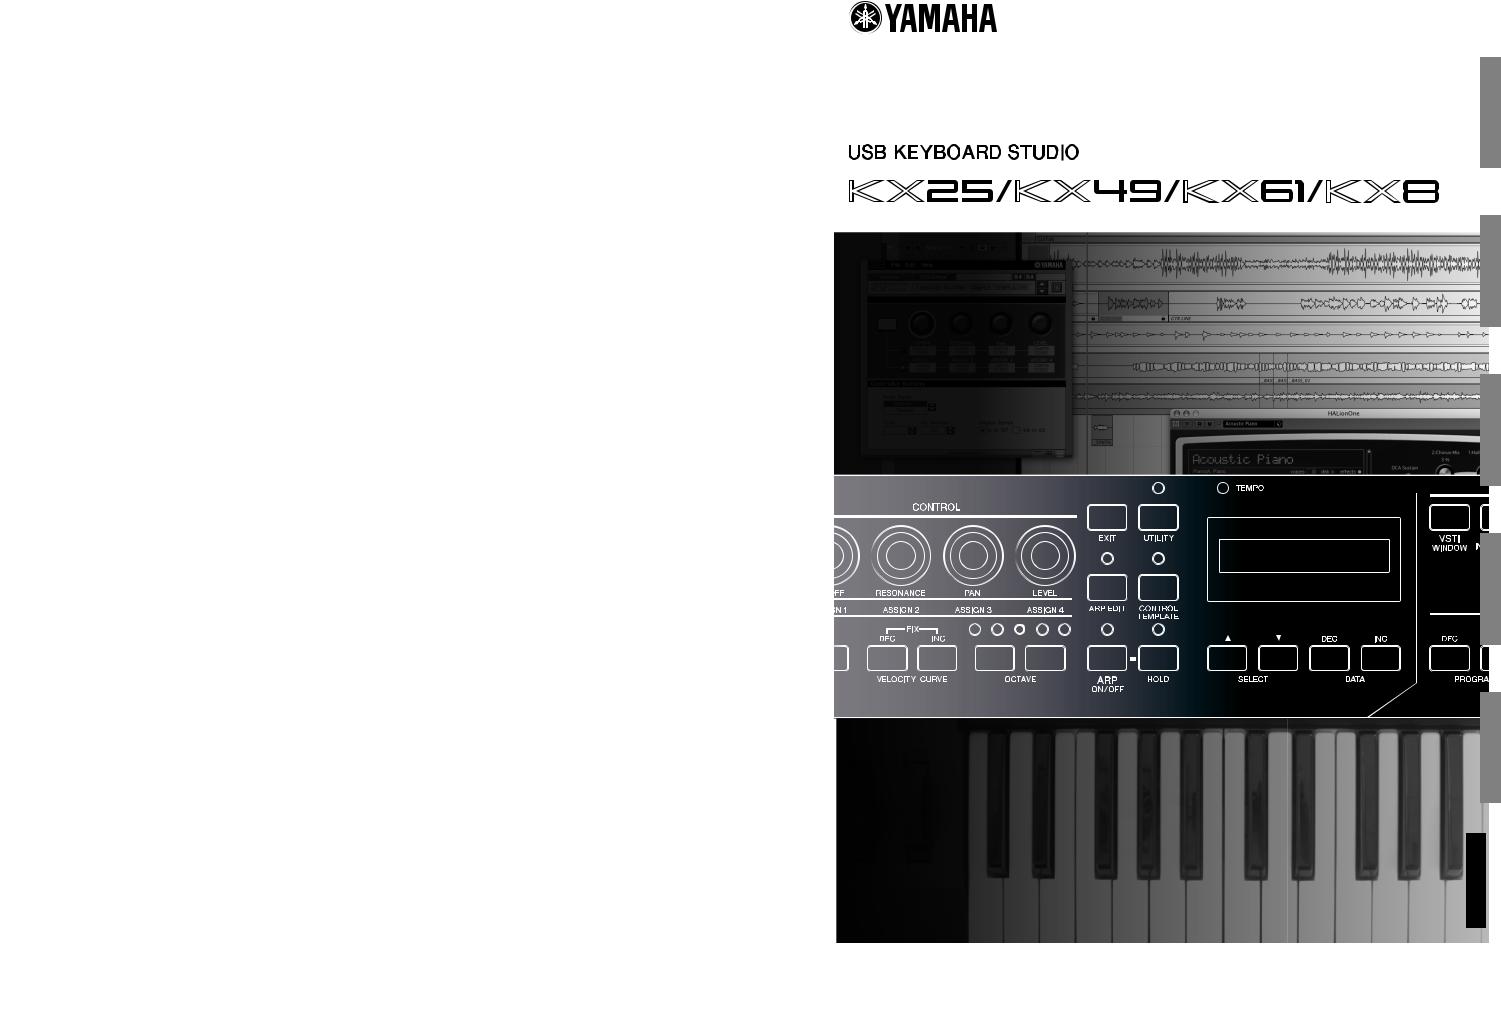 Yamaha KX8, KX49, KX61 User Manual